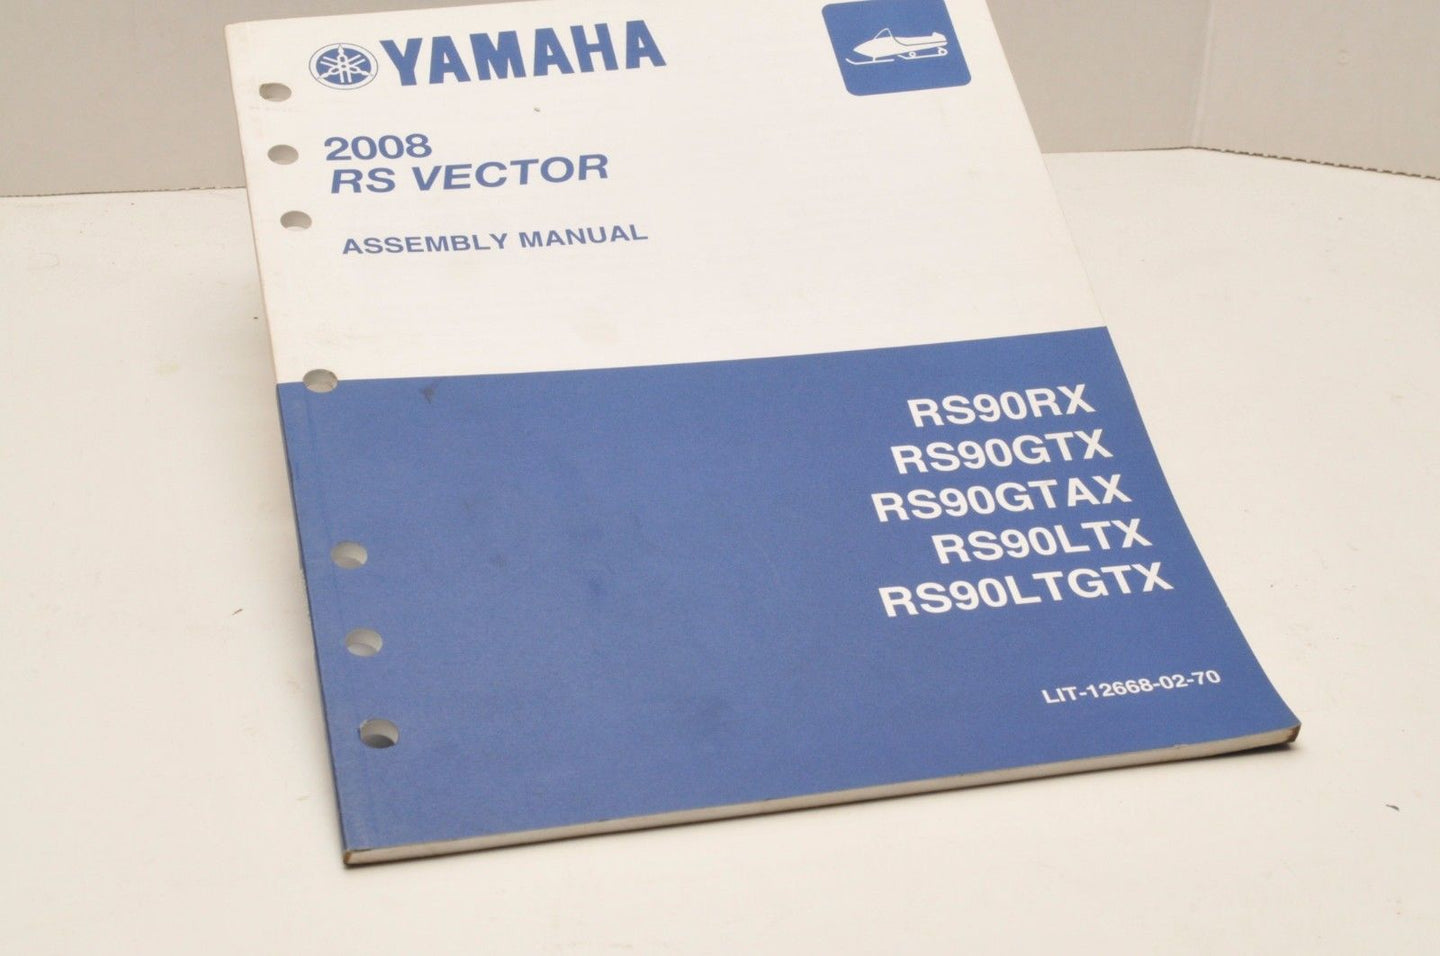 Genuine Yamaha FACTORY ASSEMBLY SETUP MANUAL RS VECTOR 2008 LIT-12668-02-70